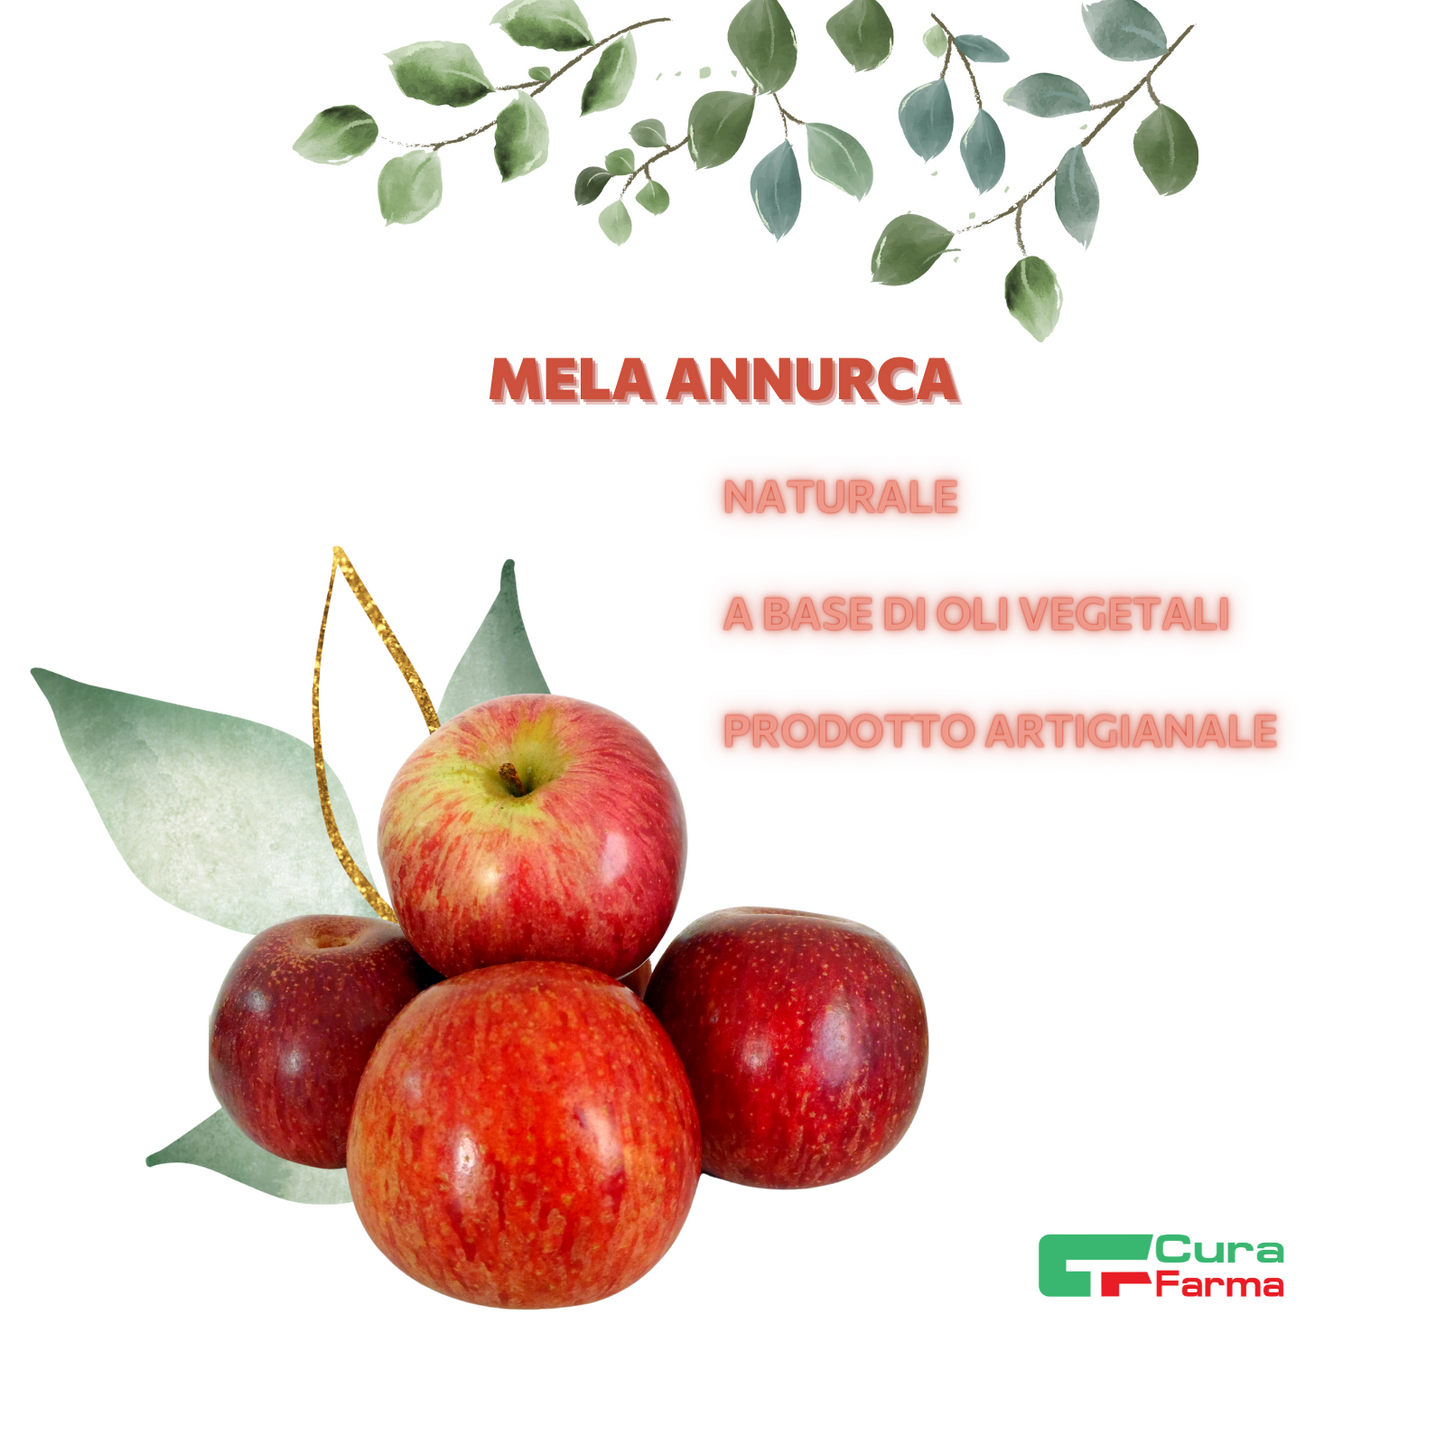 Sapone MELA ANNURCA Naturale 3 SAPONETTE OLIO 100% Vegetale 3x150g Made in Italy